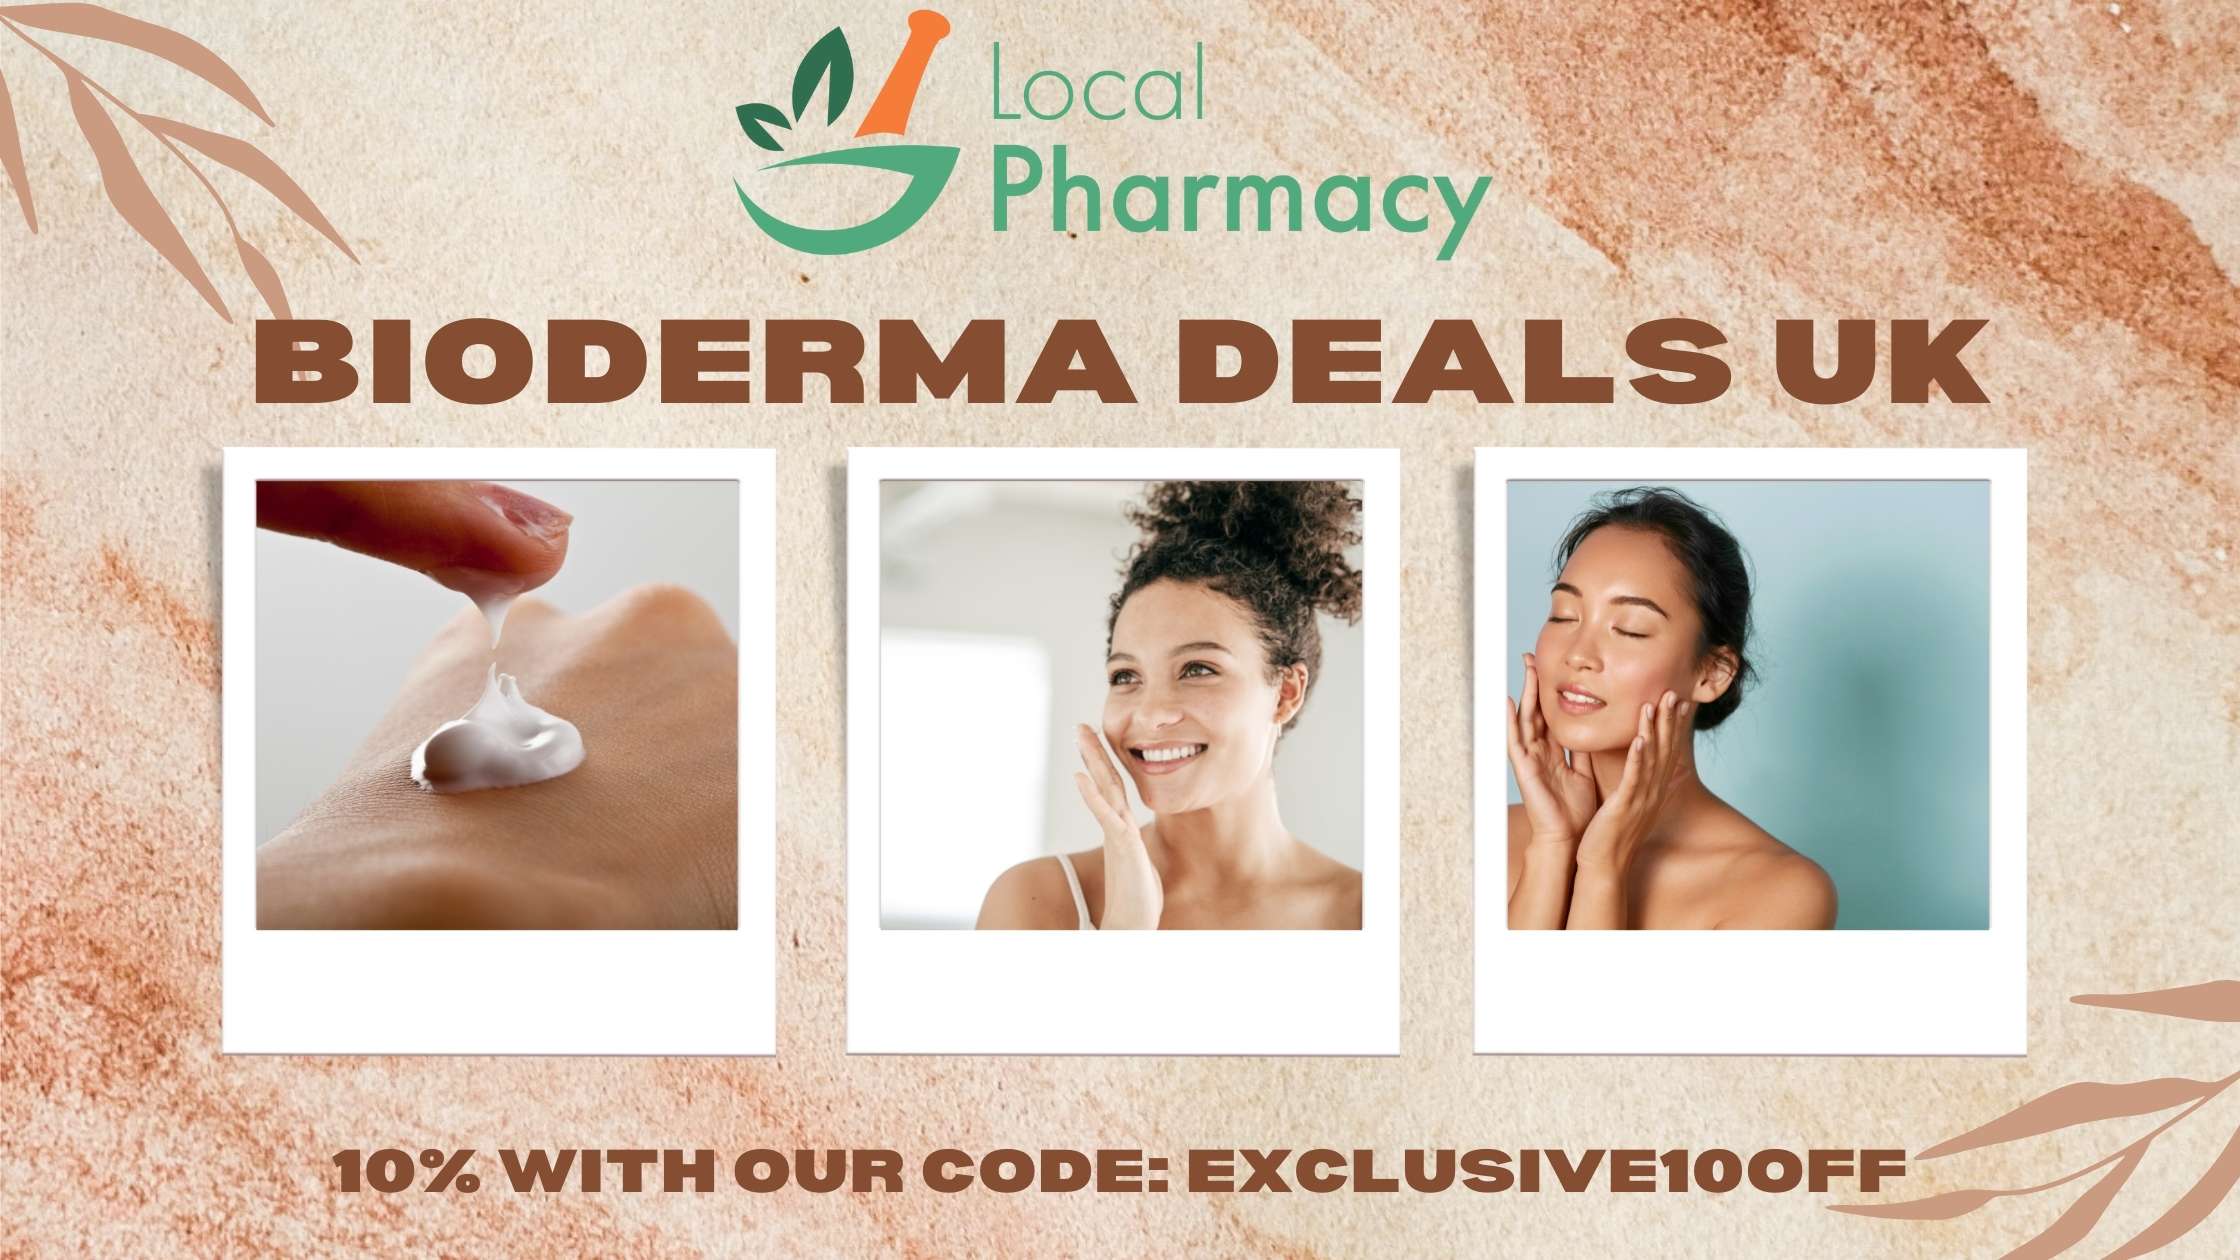 Bioderma coupon code and deals uk